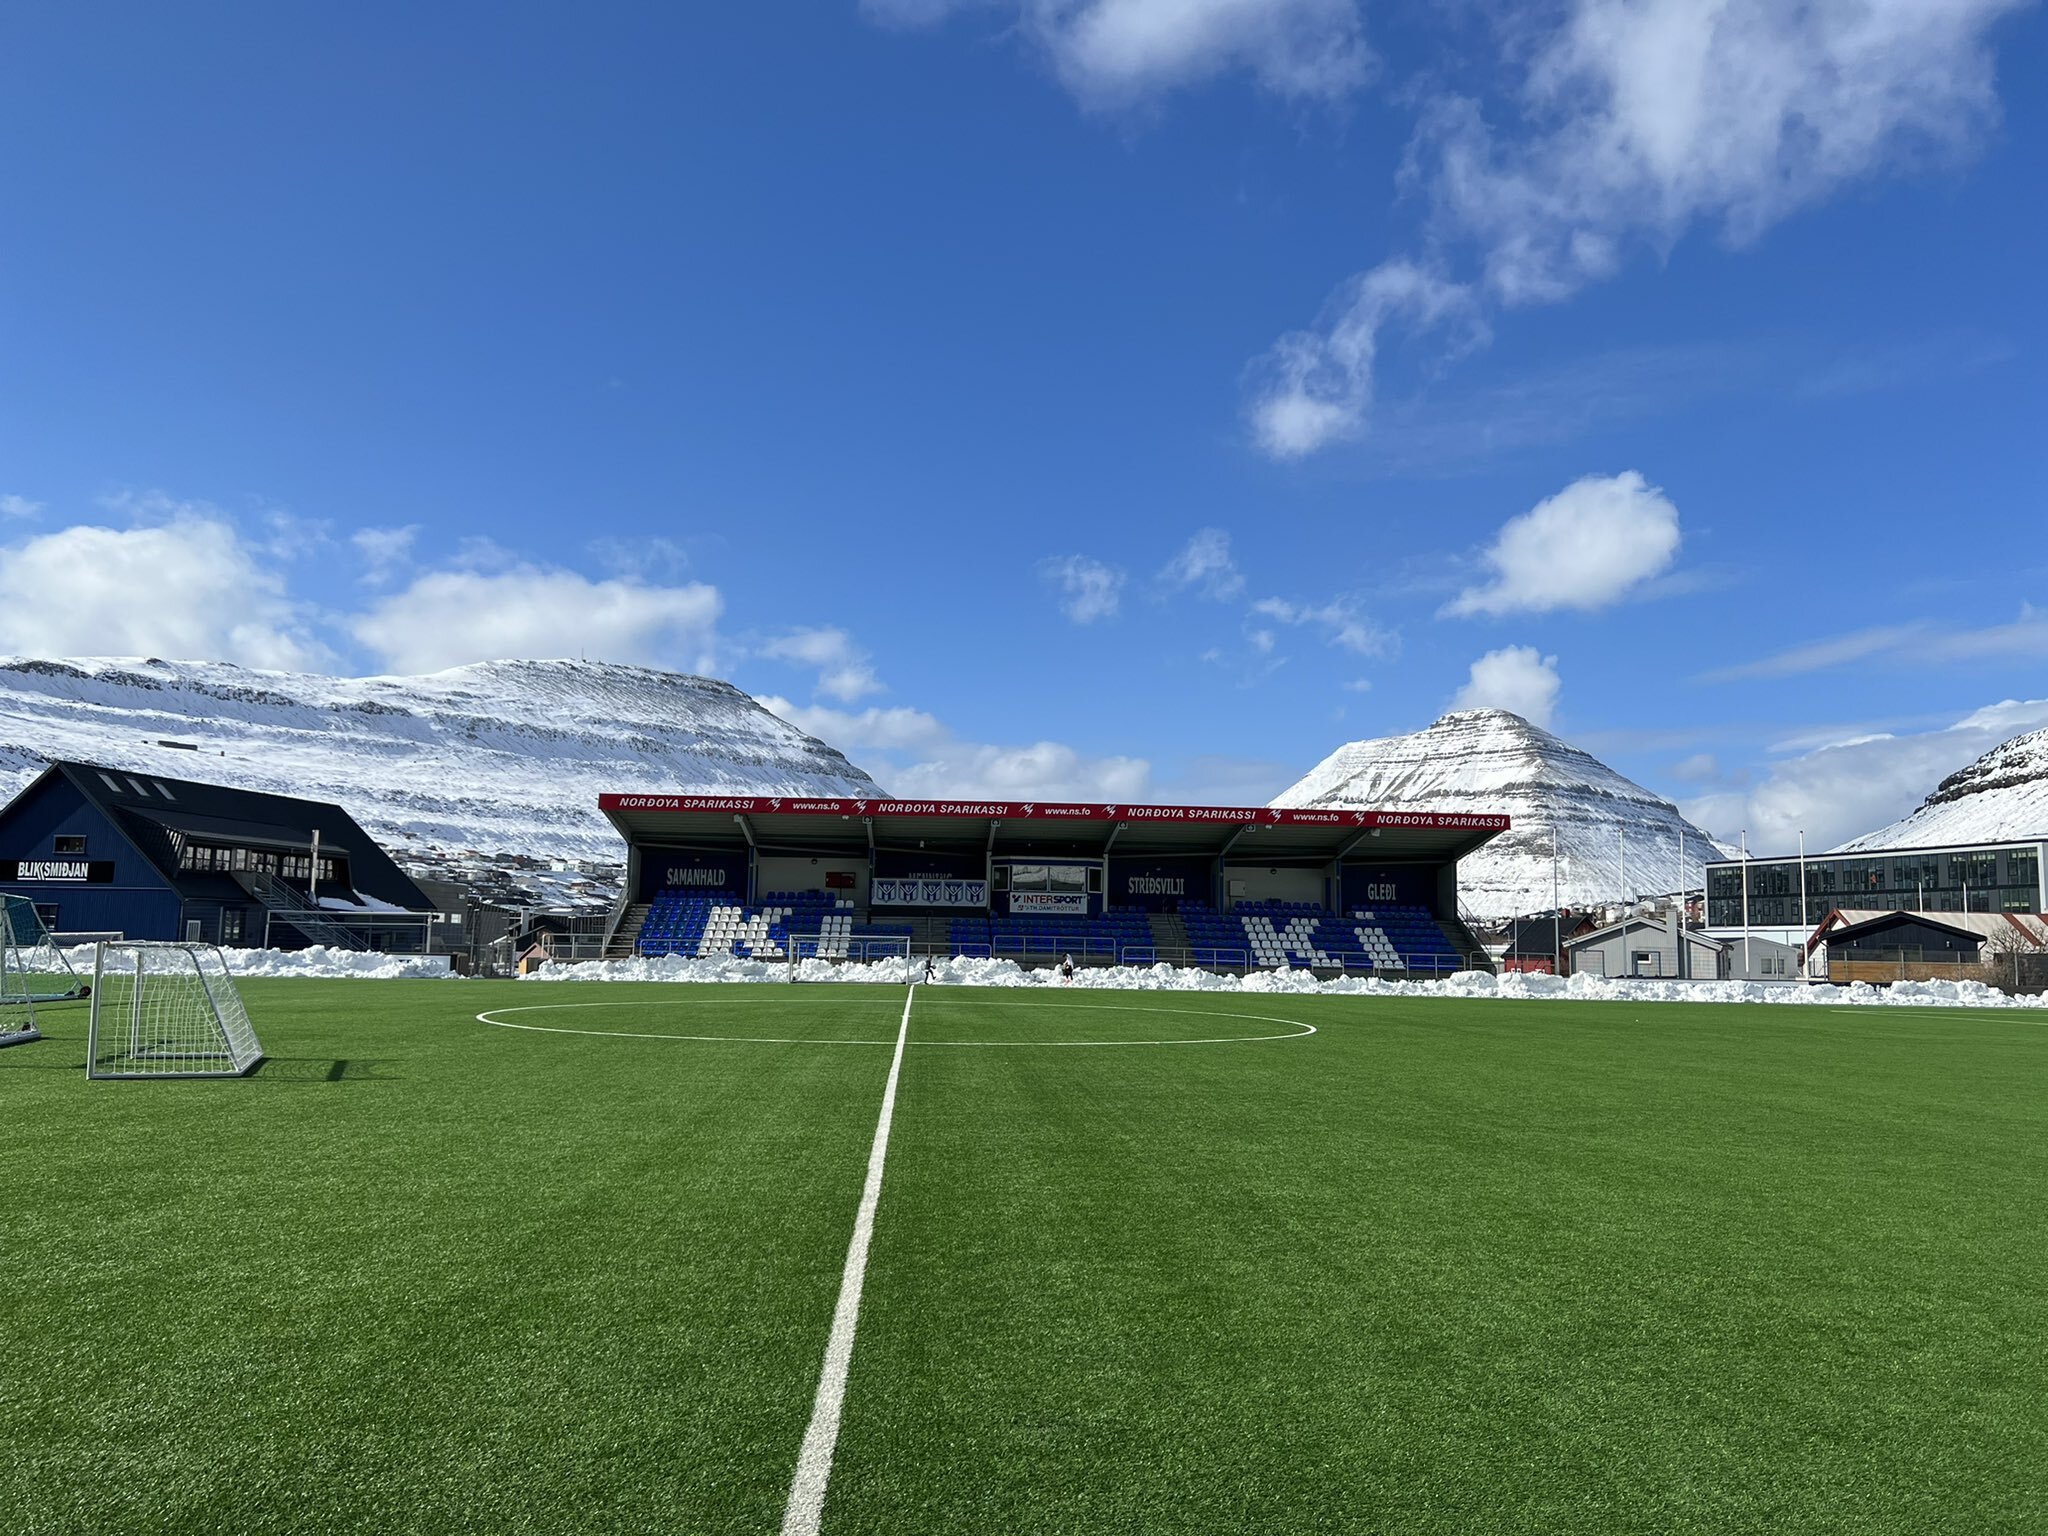 Стадион на острове. Фарерские острова Клаксвик стадион. Стадион на Фарерских островах. Главный стадион Фарерские острова. Стадион Клаксвик Фарерские острова вид сверху.